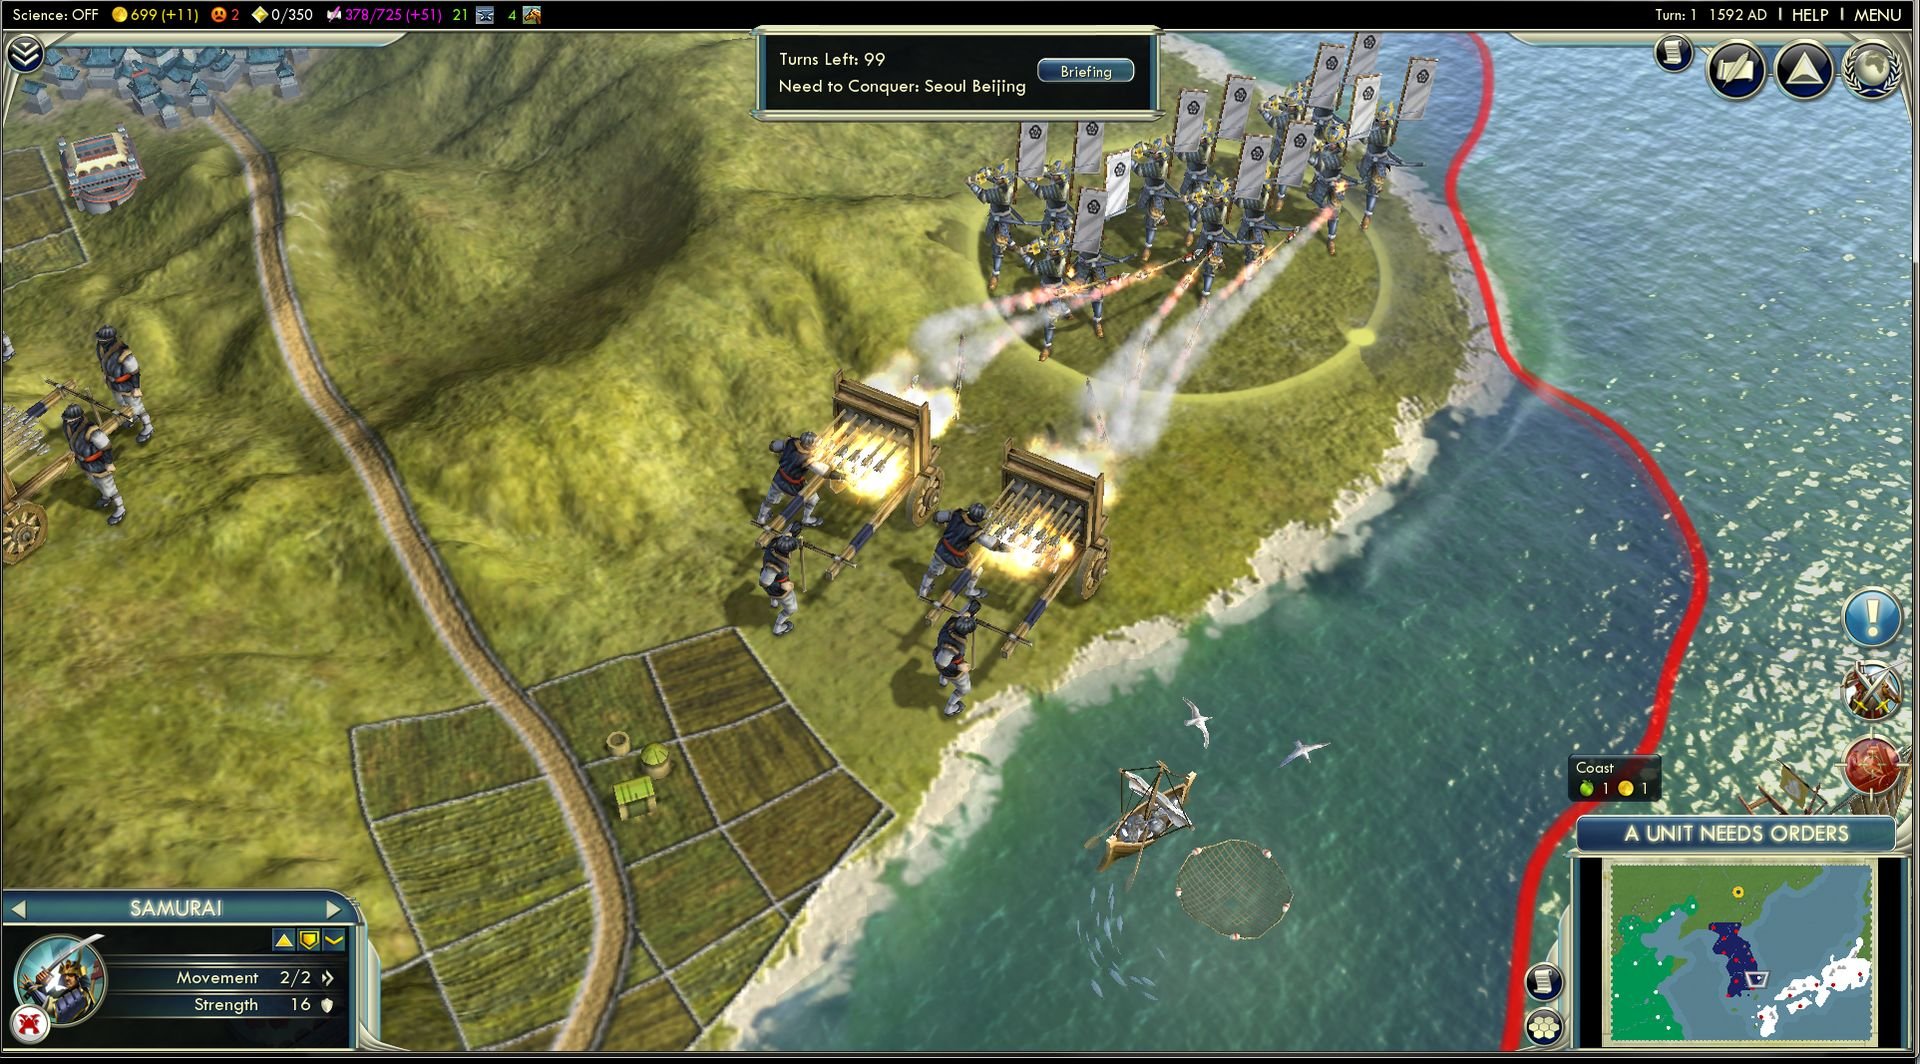 Sid Meier's Civilization V: Korea Civilization and Scenario Pack [Online Game Code]